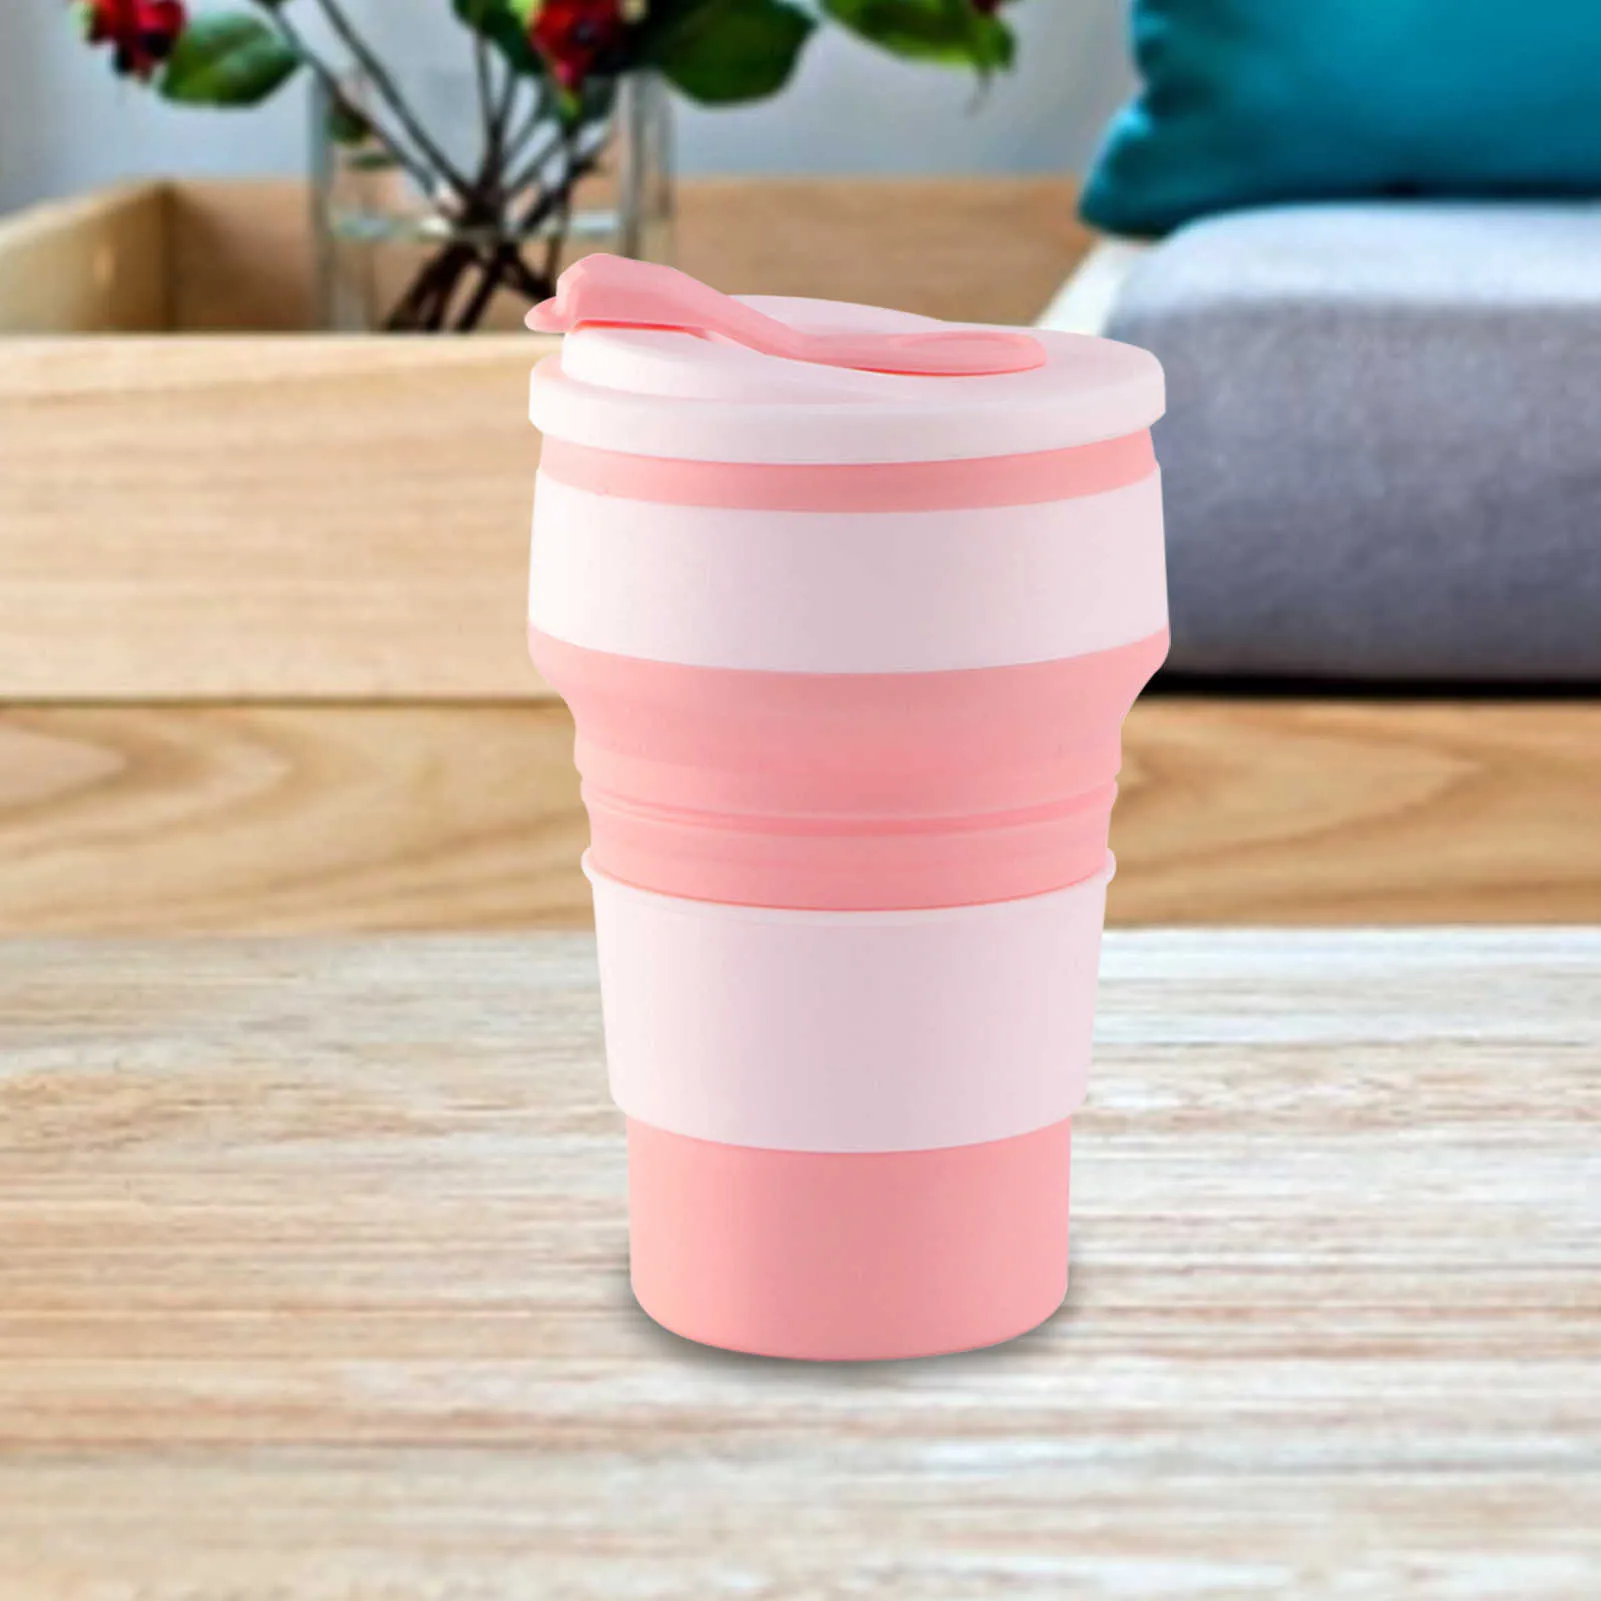 Outdoor Silikon Falten Wasser Tasse Mit Deckel Versenkbare Reise Mini Kaffeetassen Tragbare Gurgeln Copa Dropship Y0915